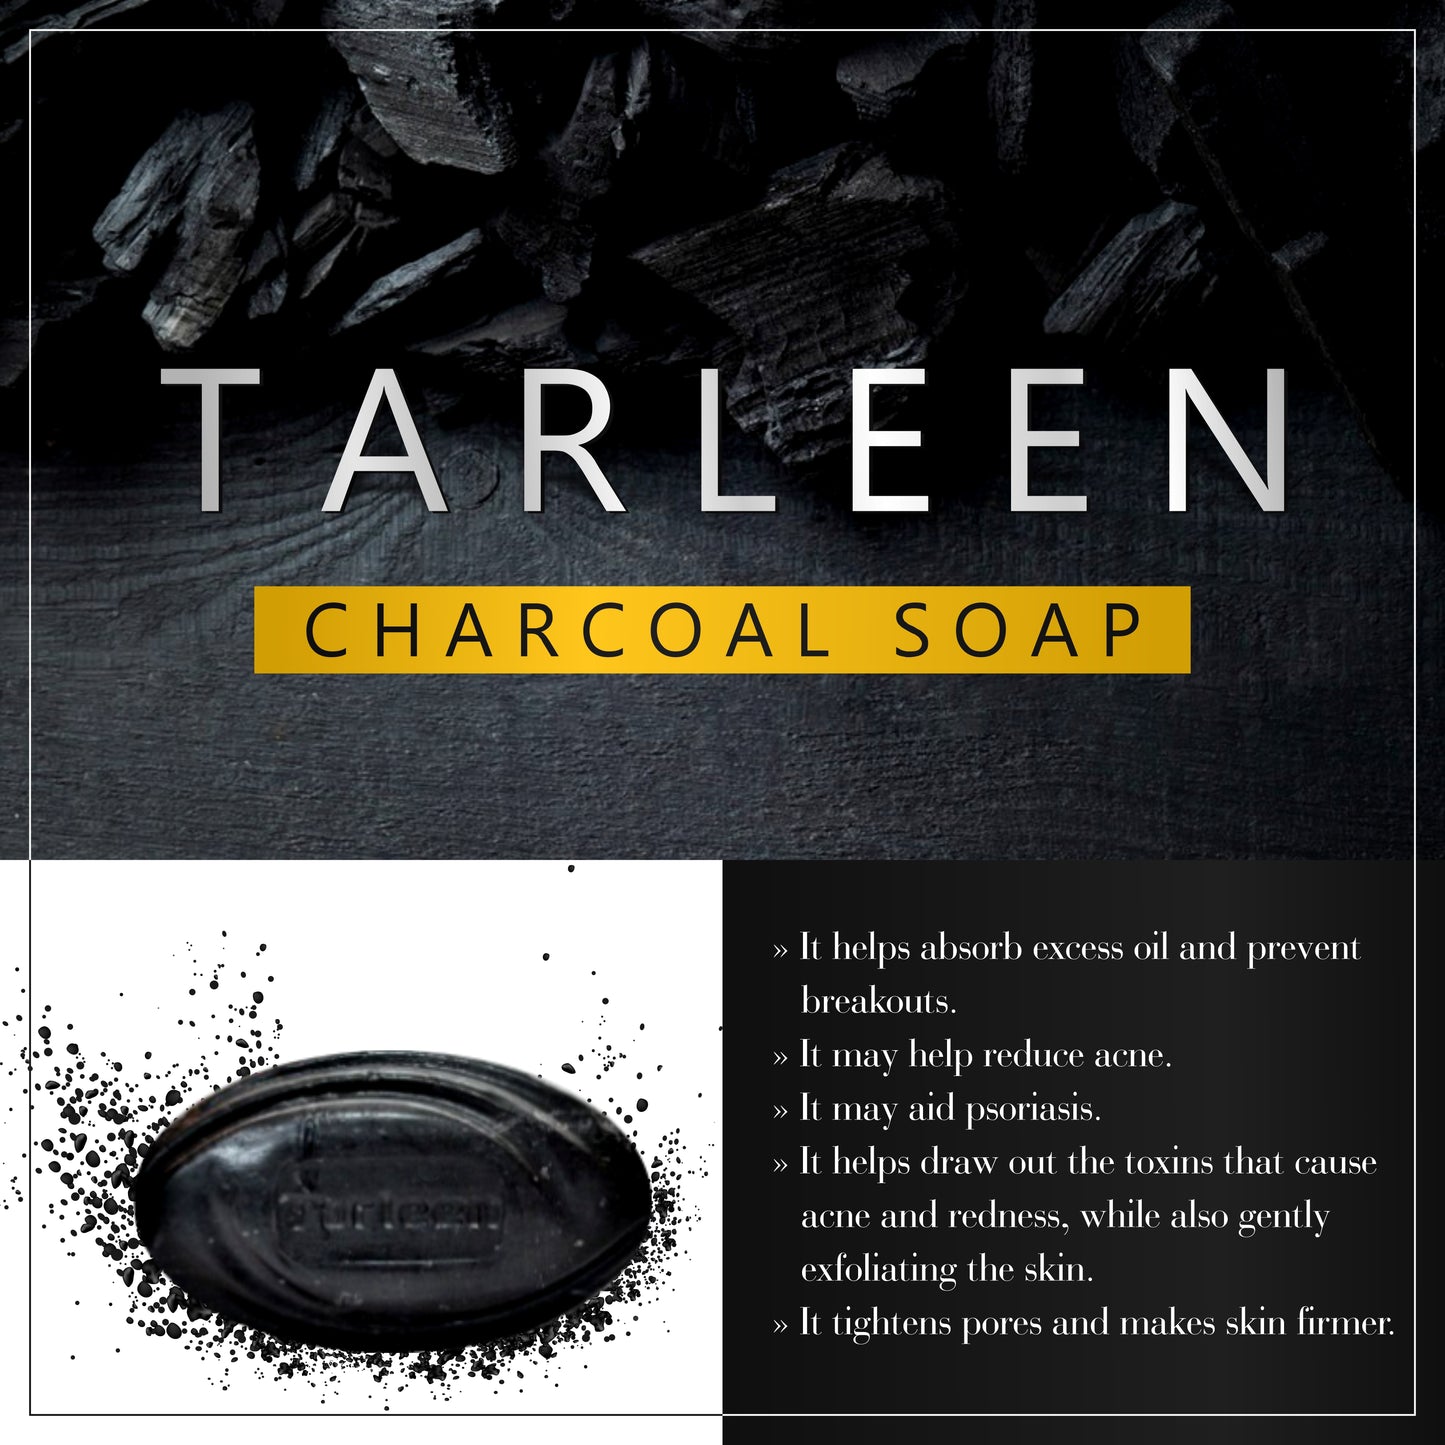 Tarleen Charcoal Soap